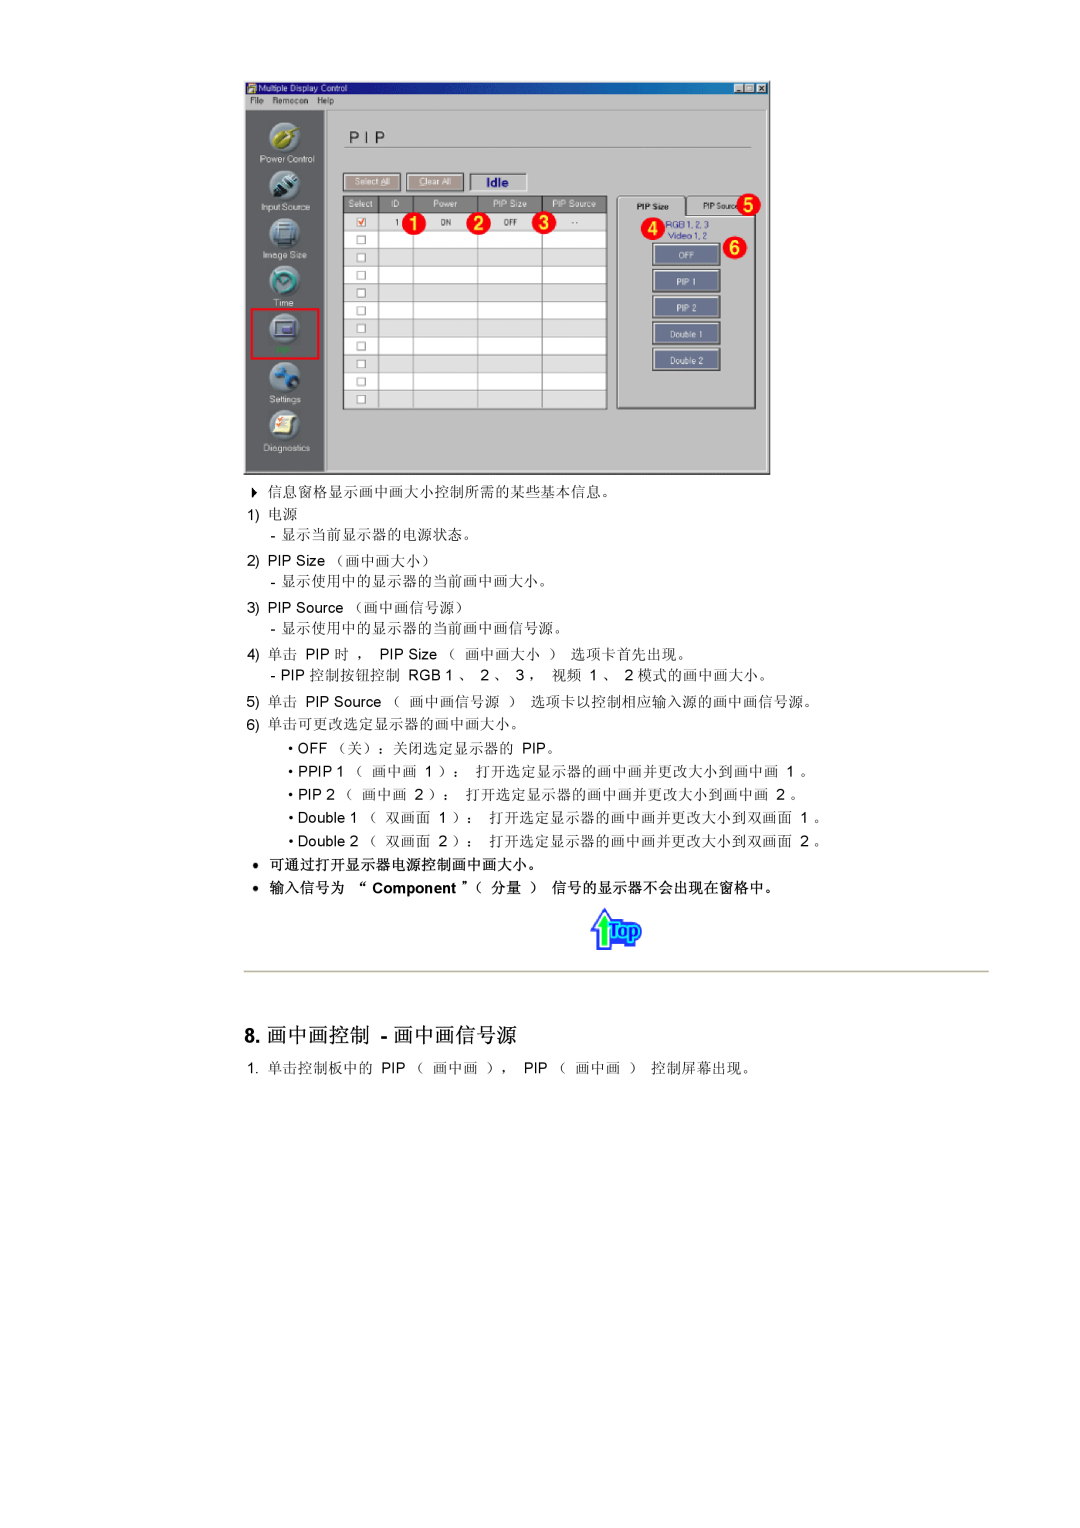 Samsung CK40PSNS/EDC, CK40PSNBG/EDC manual 8. 画中画控制 - 画中画信号源, 可通过打开显示器电源控制画中画大小。 输入信号为 “ Component ”（ 分量 ） 信号的显示器不会出现在窗格中。 